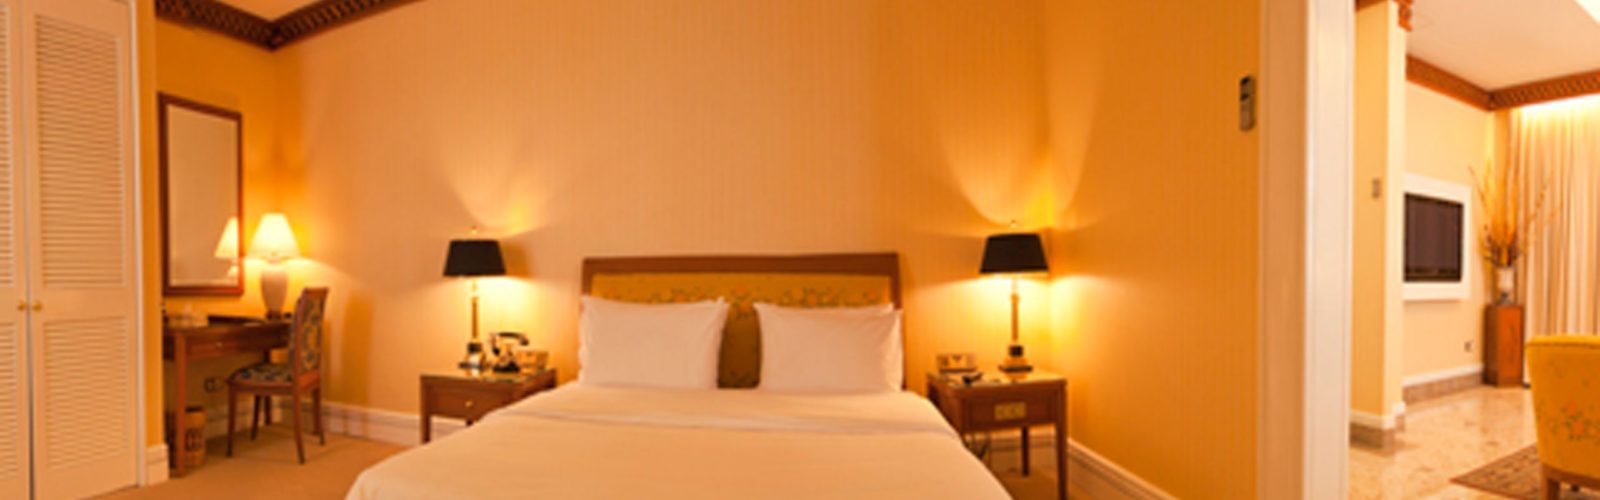 The Jesselton Hotel - Luxury Hotel In Kota Kinabalu | Jacada Travel